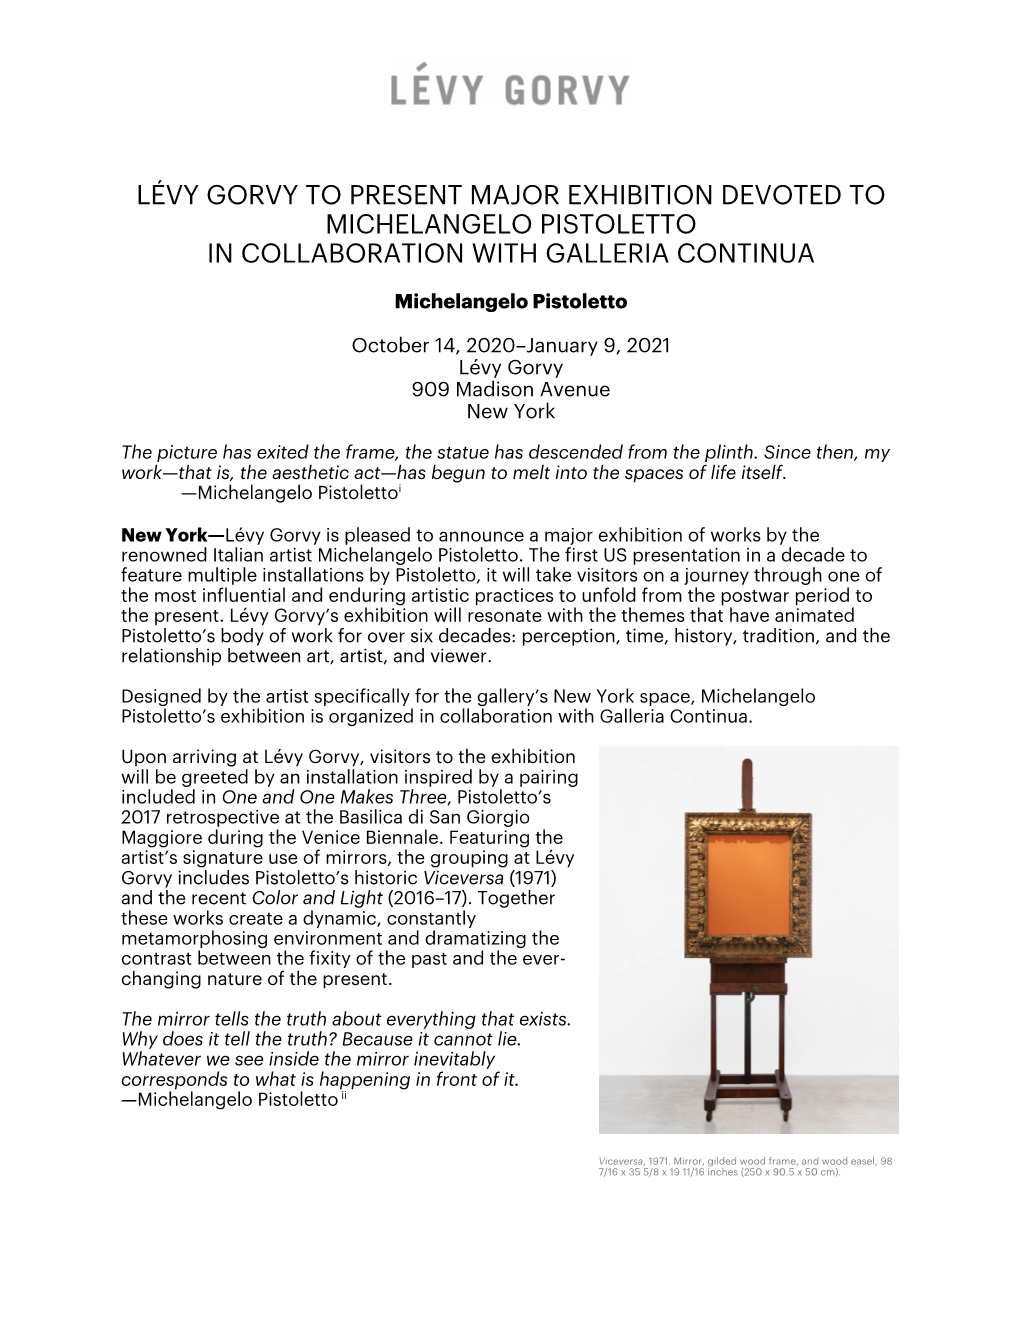 Lévy Gorvy to Present Major Exhibition Devoted to Michelangelo Pistoletto in Collaboration with Galleria Continua